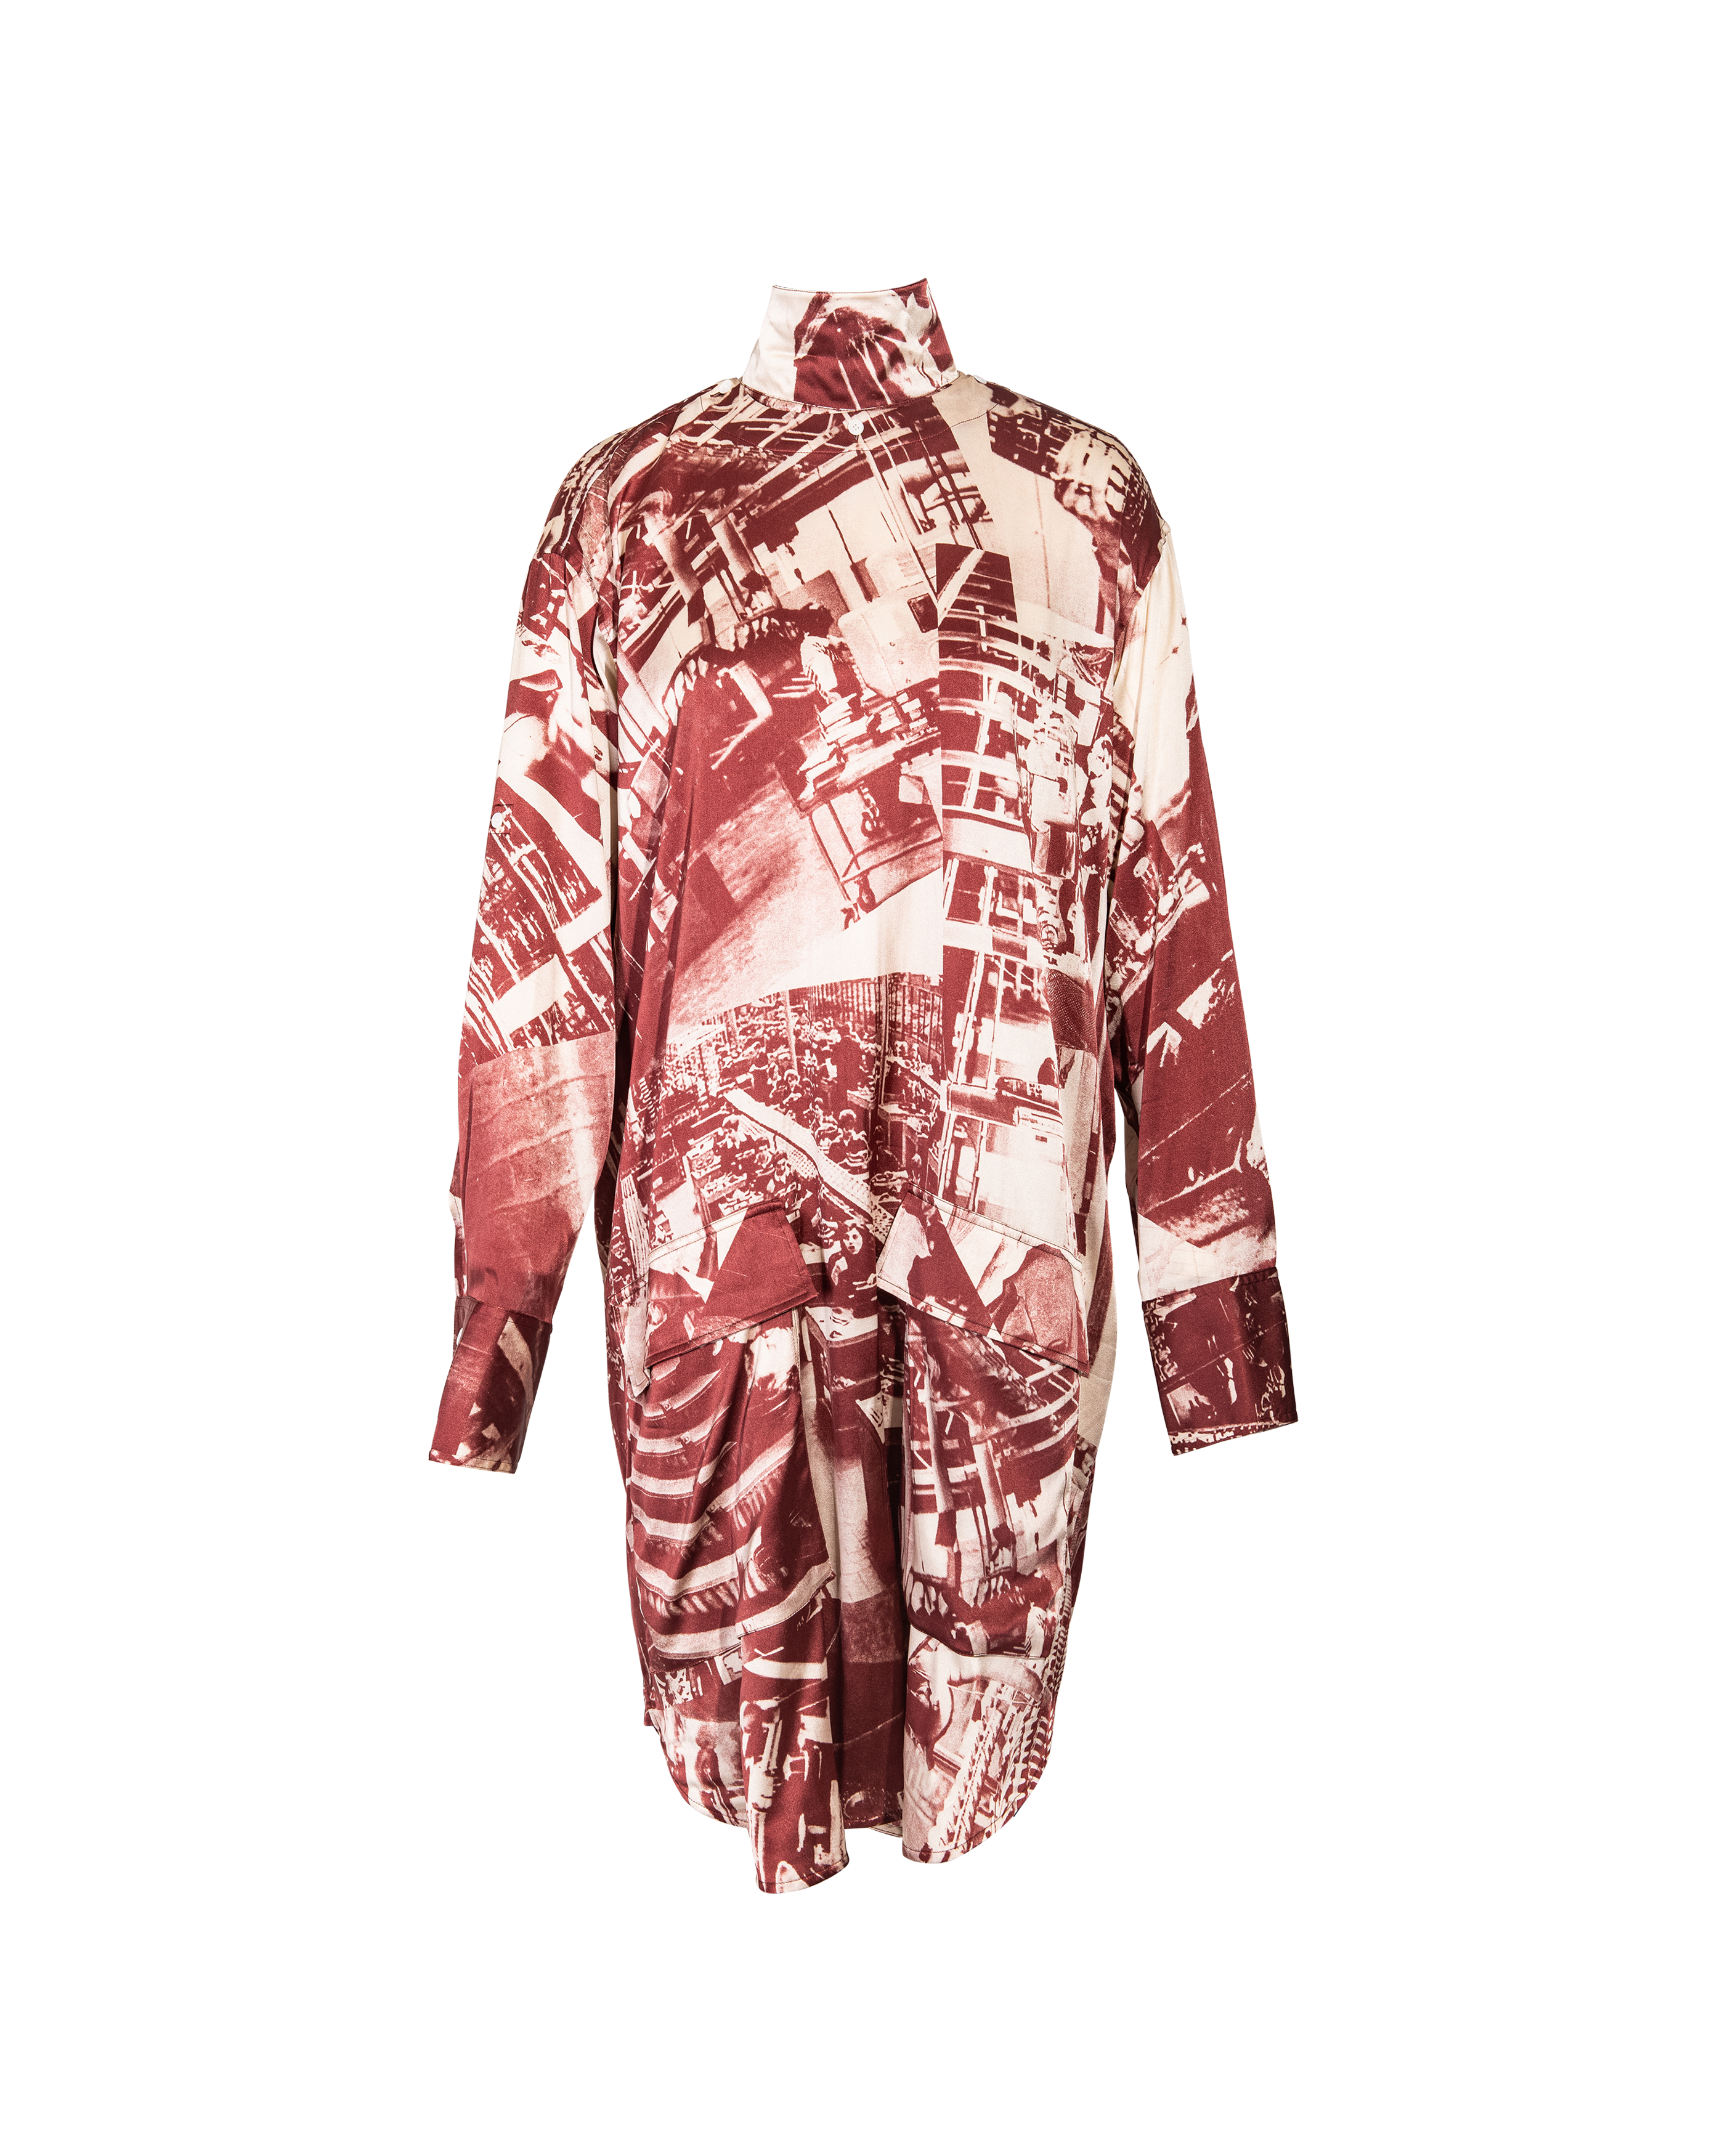 S/S 2018 'Factory' Print Silk Tunic Dress